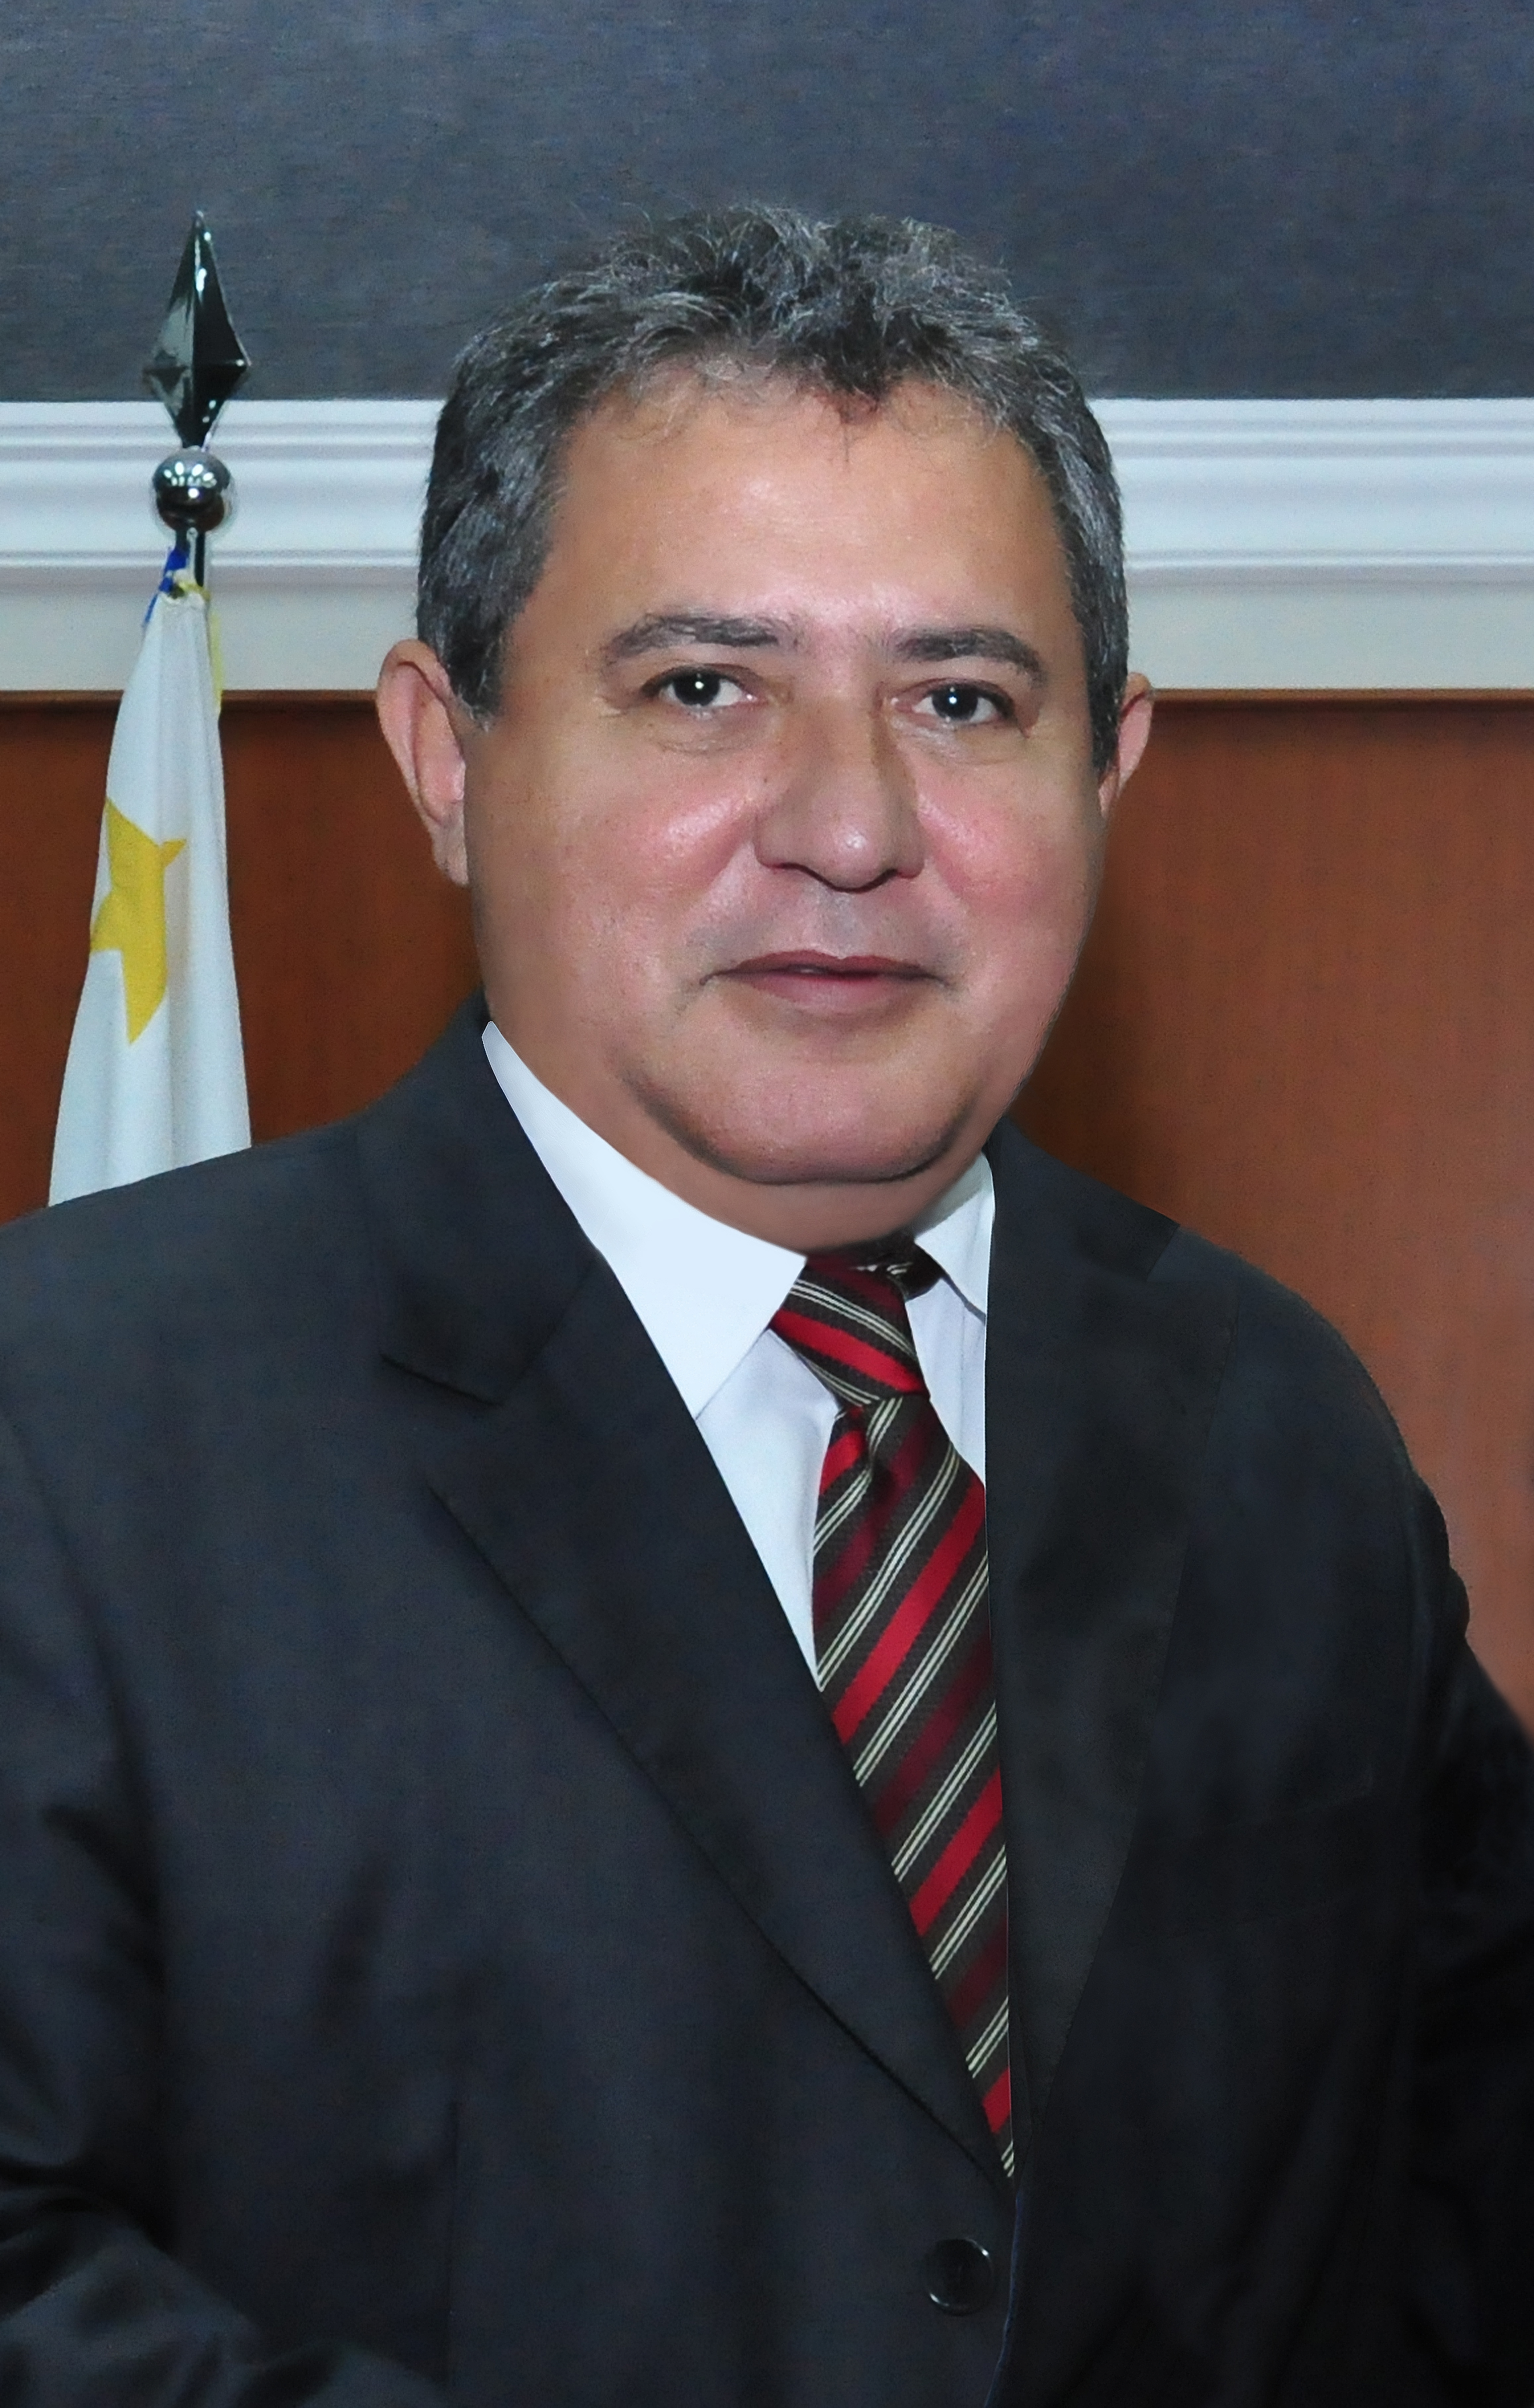 Francisco de Sales Guerra Neto